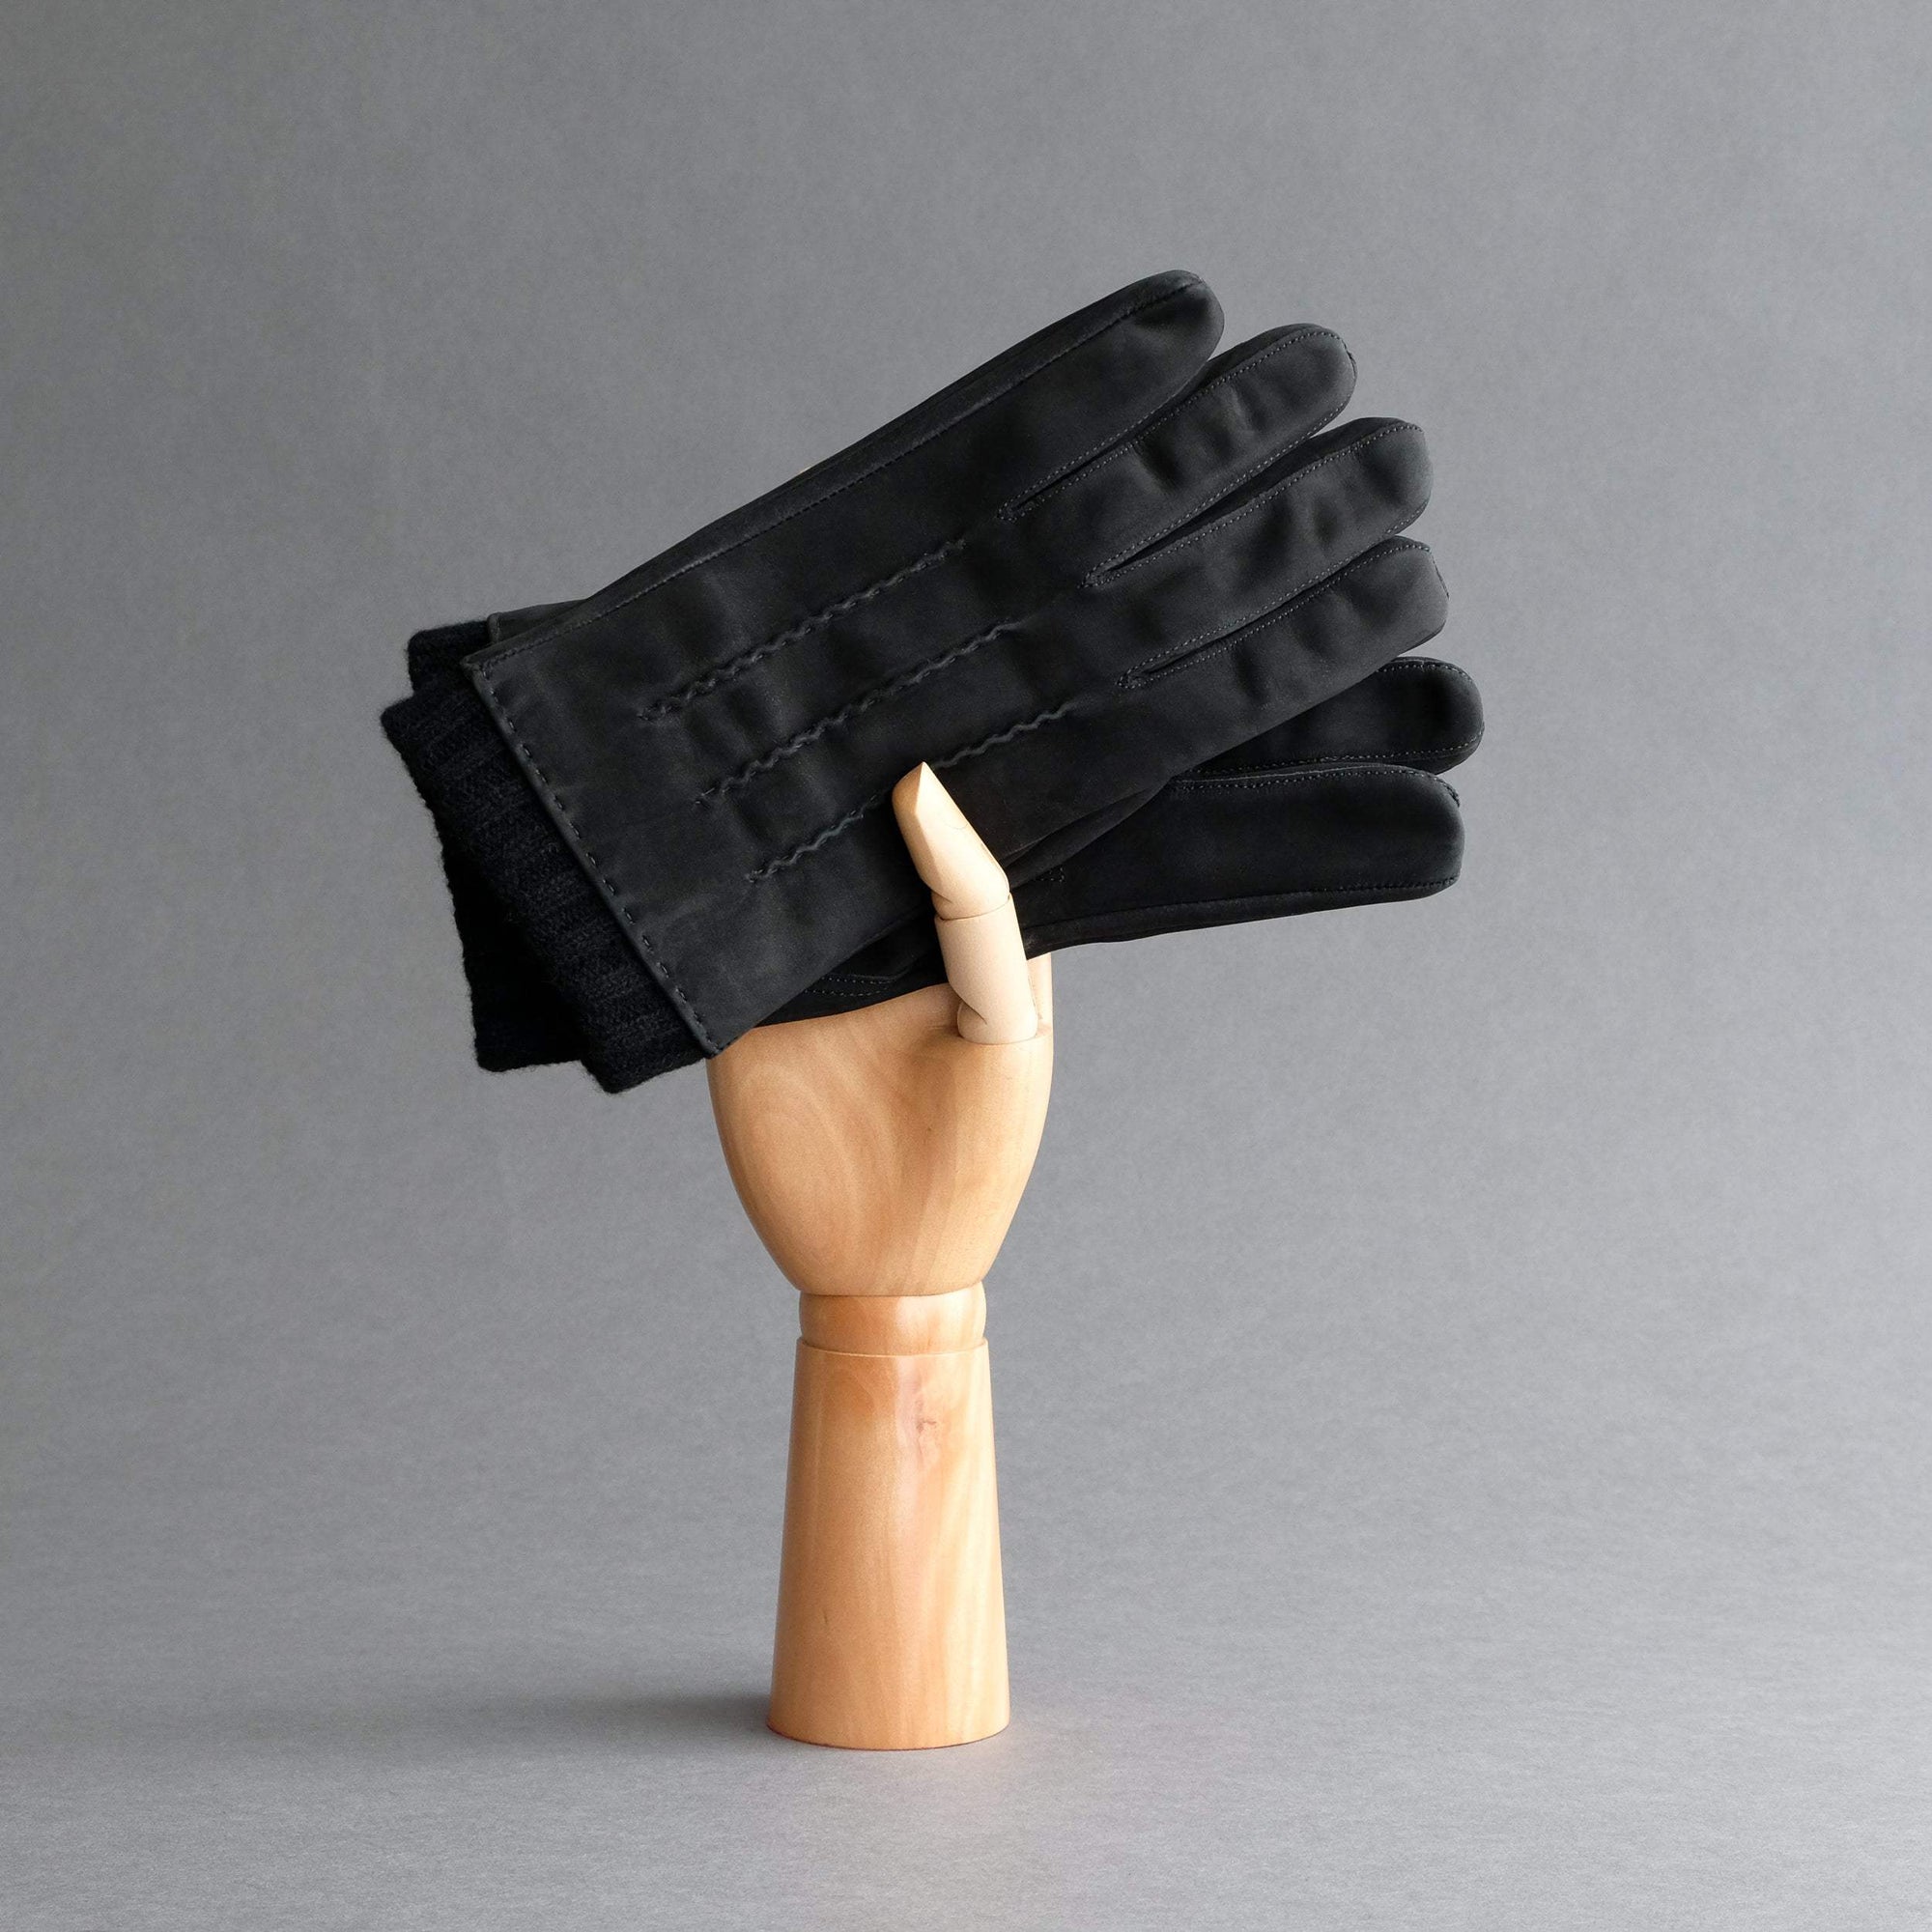 Gentlemen's Gloves from Black Goatskin Nubuck with Cashmere Lining - TR Handschuhe Wien - Thomas Riemer Handmade Gloves